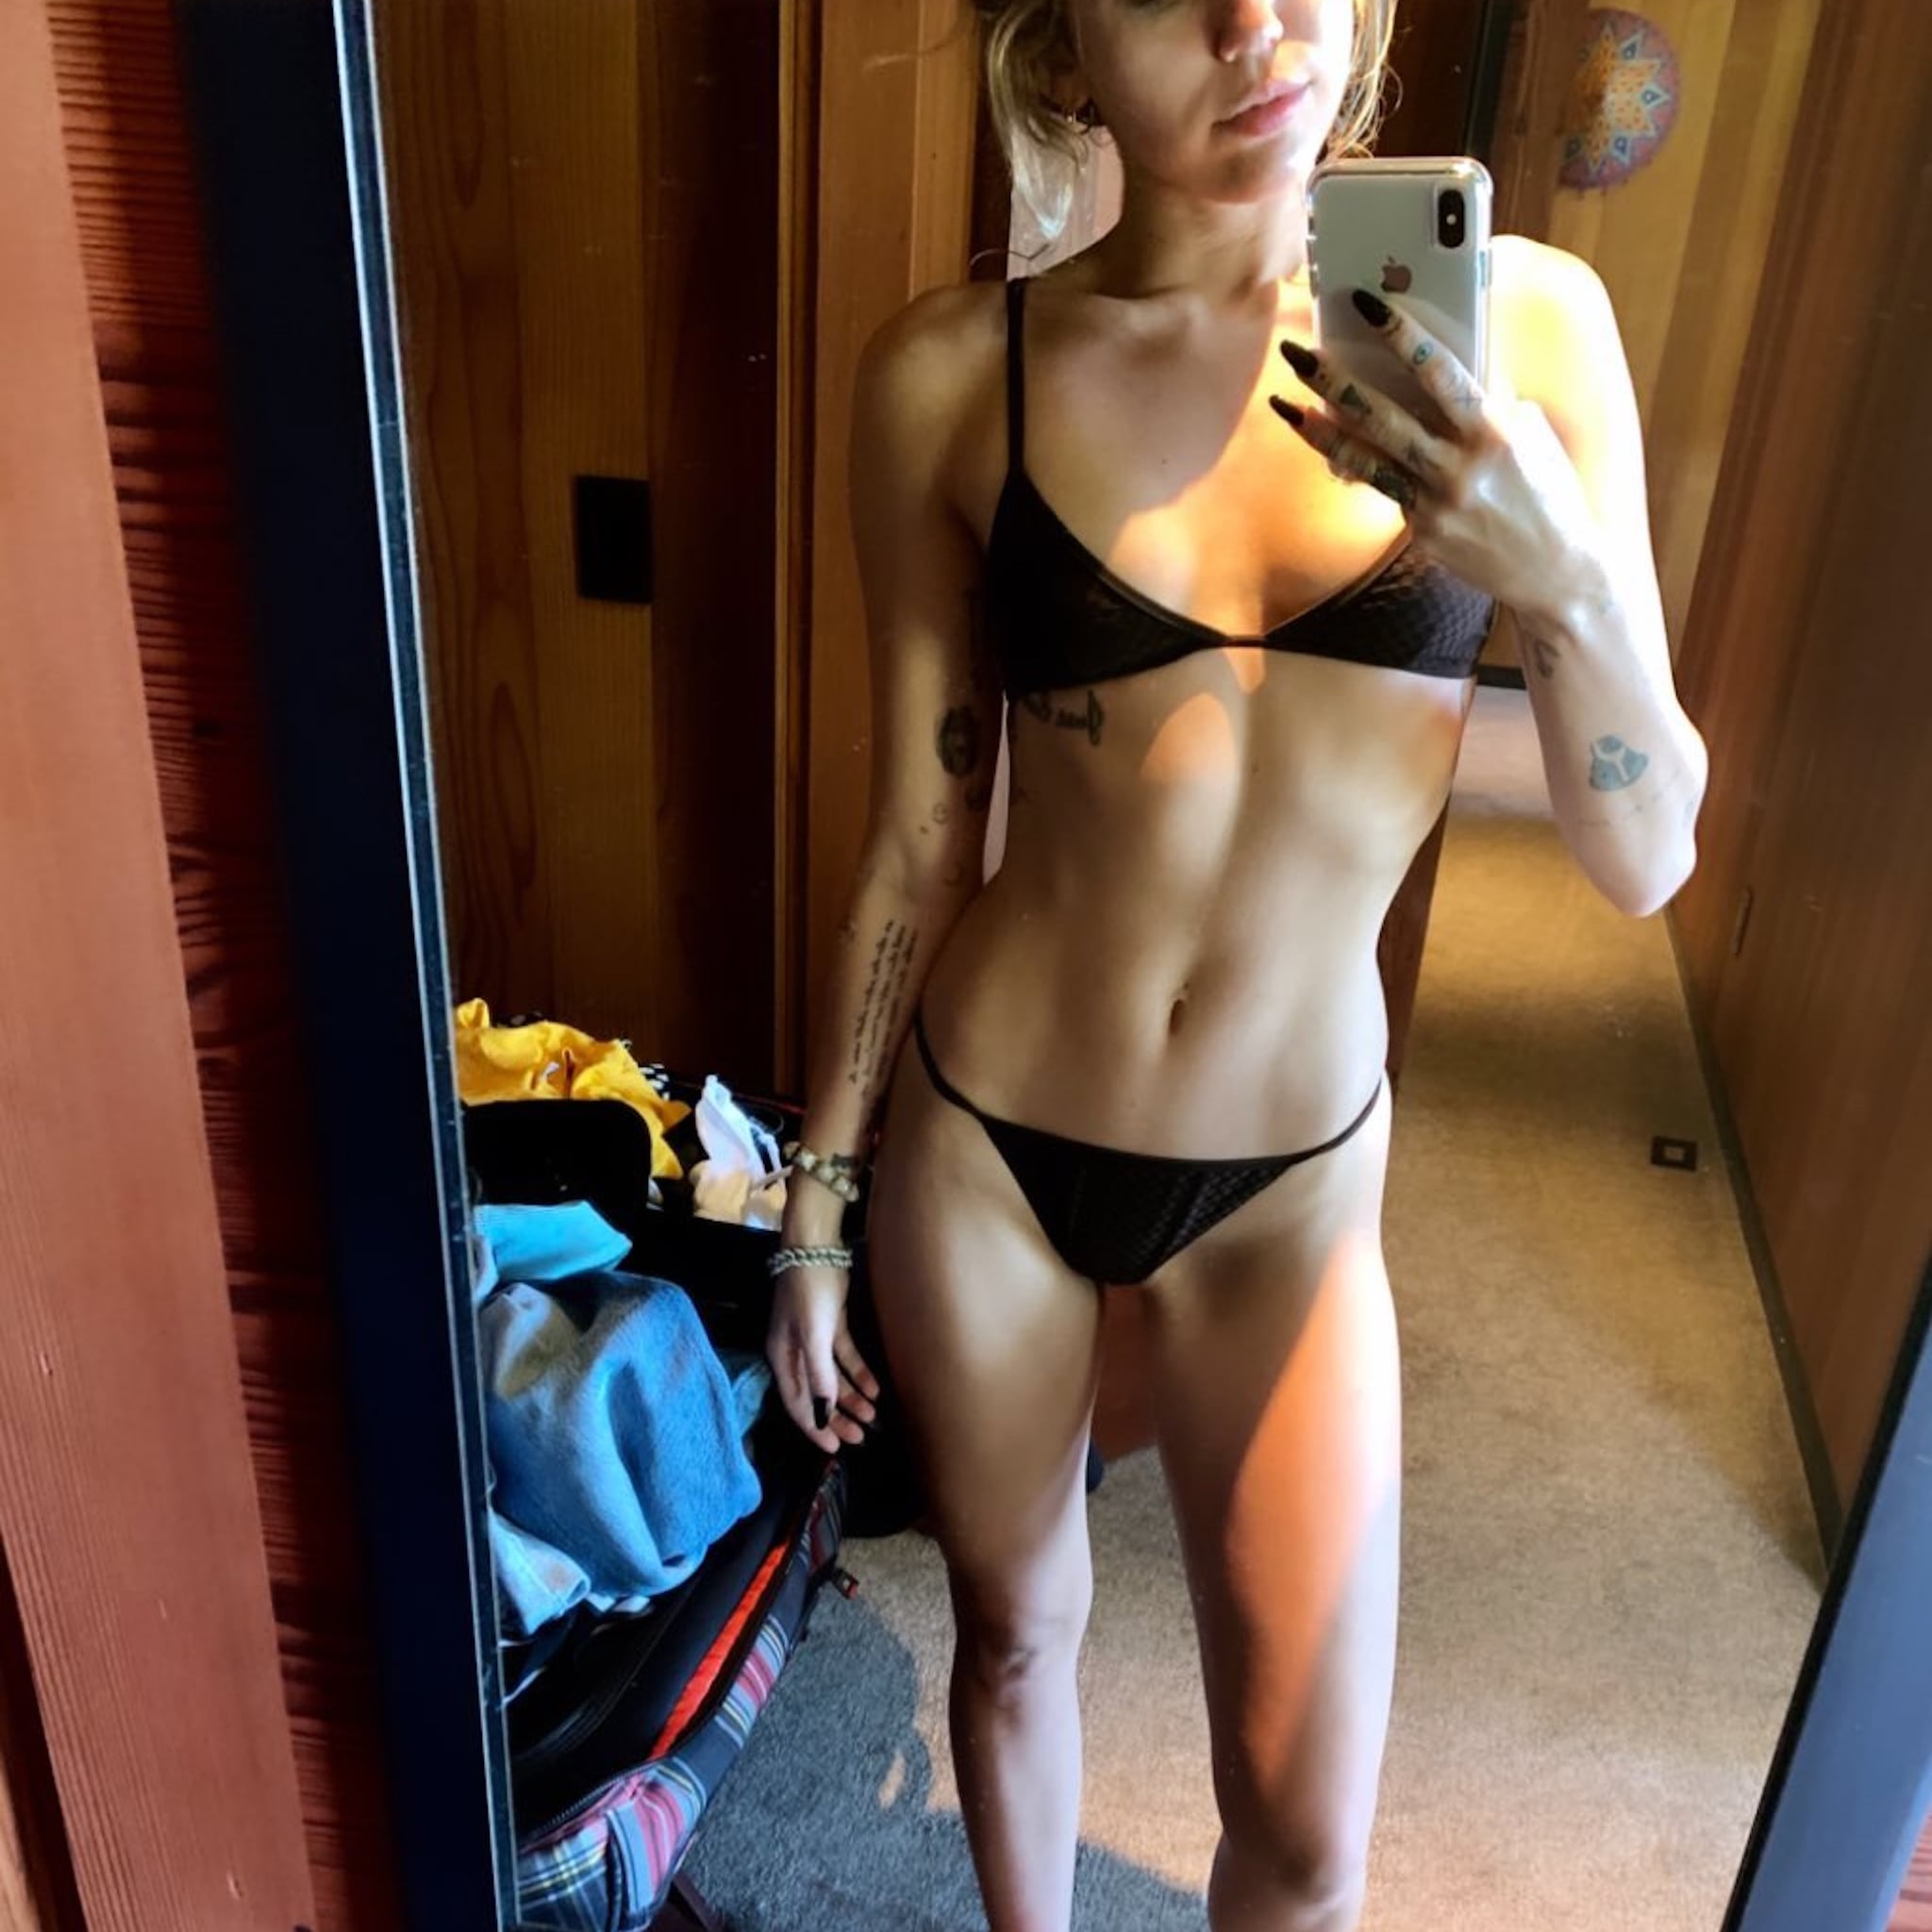 bikini top selfie